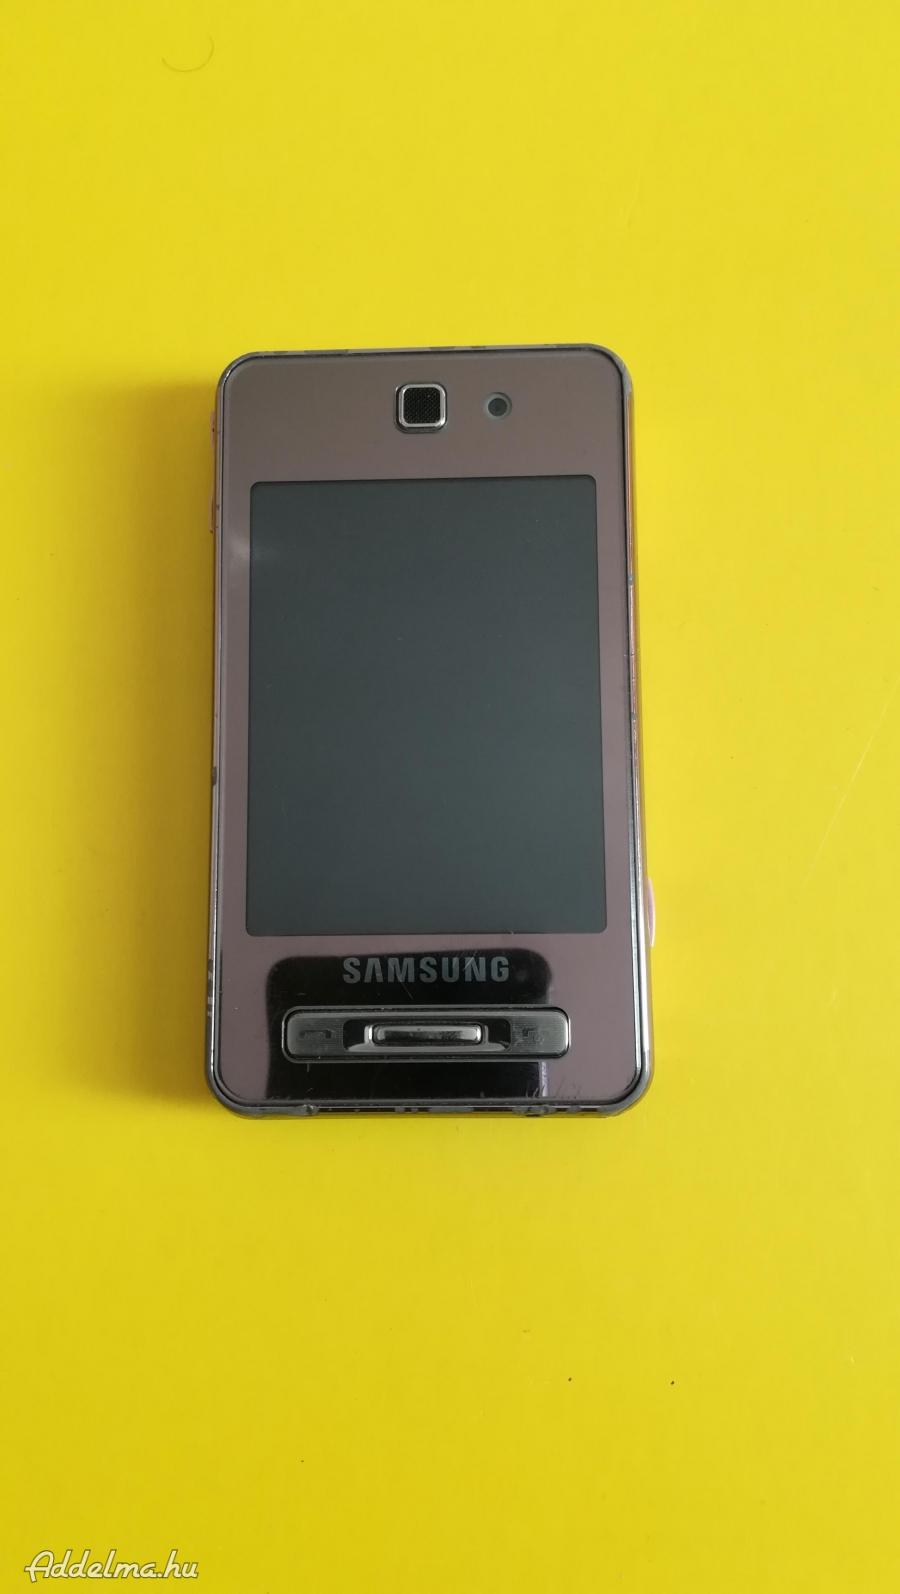 Samsung f480v mobil nem reagál semmire.